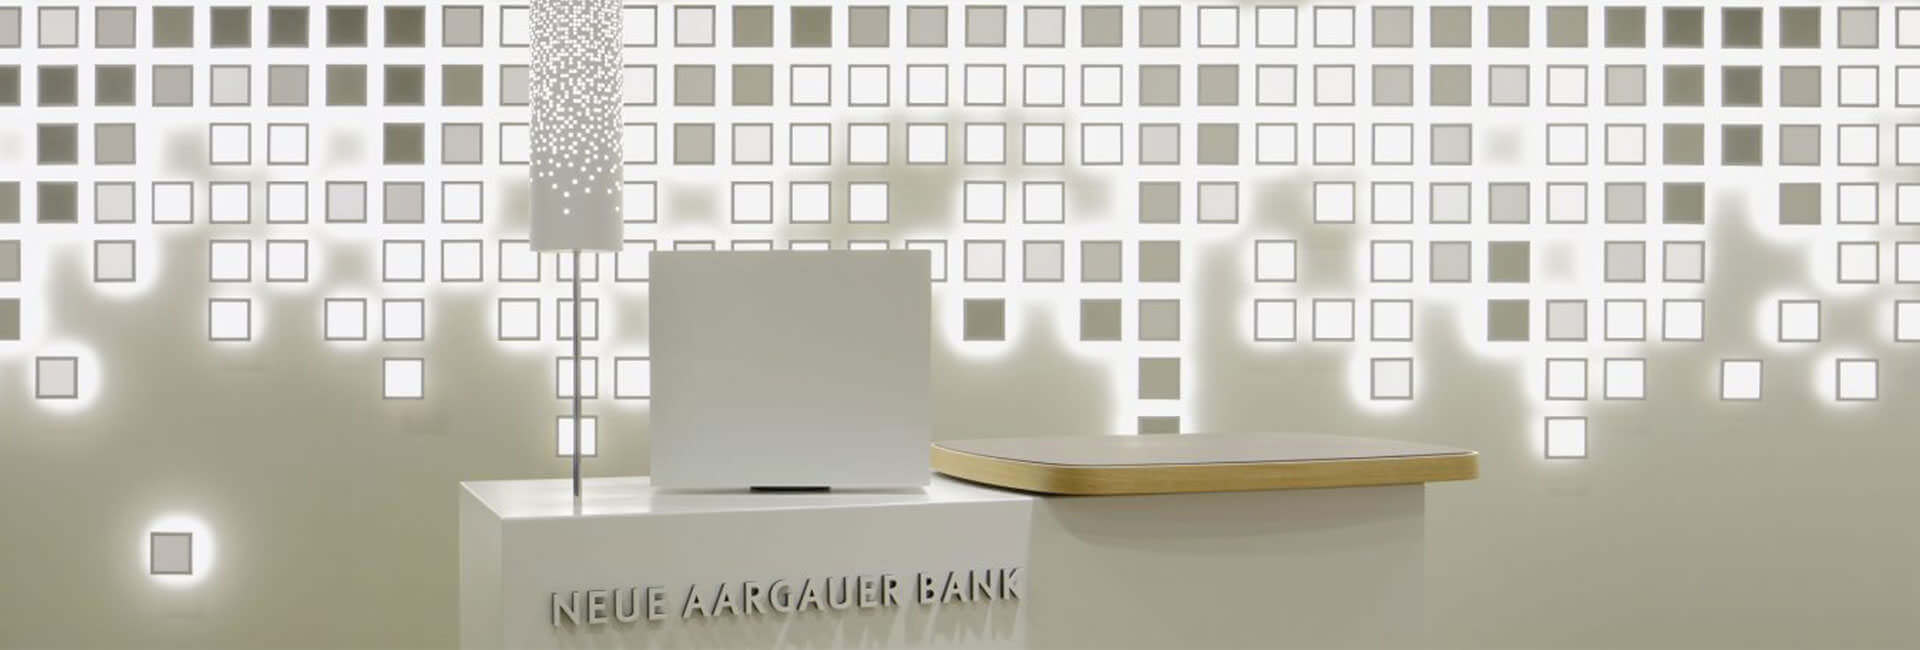 Neue Aargauer Bank with interactive OLED lighting installation